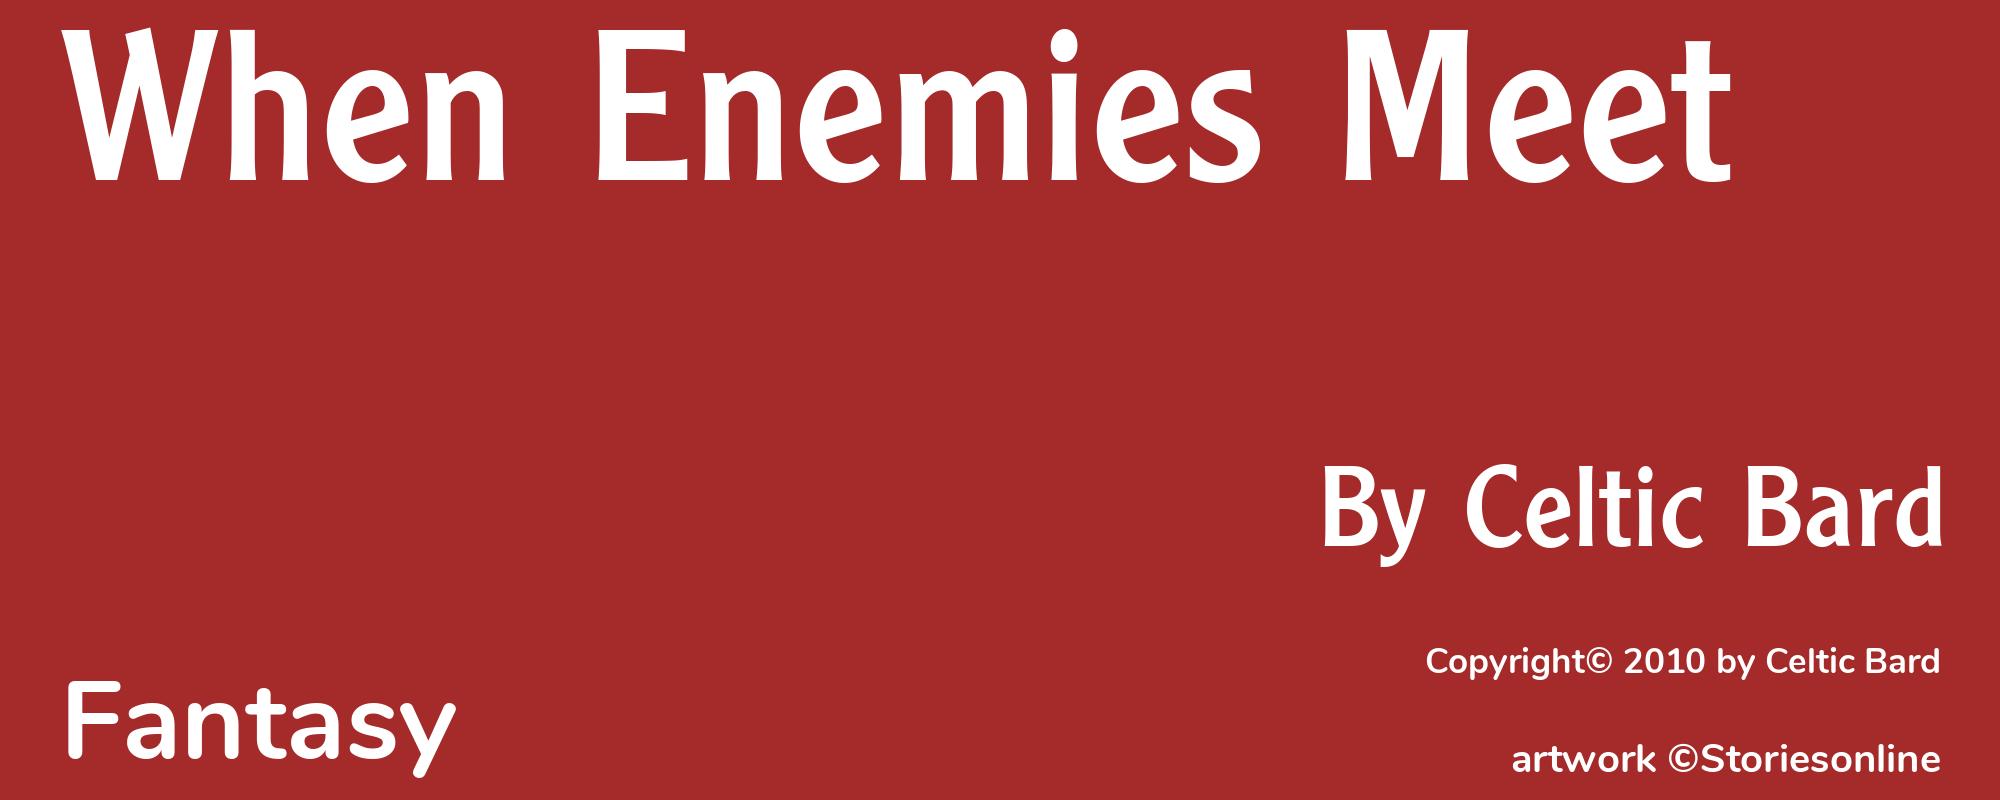 When Enemies Meet - Cover